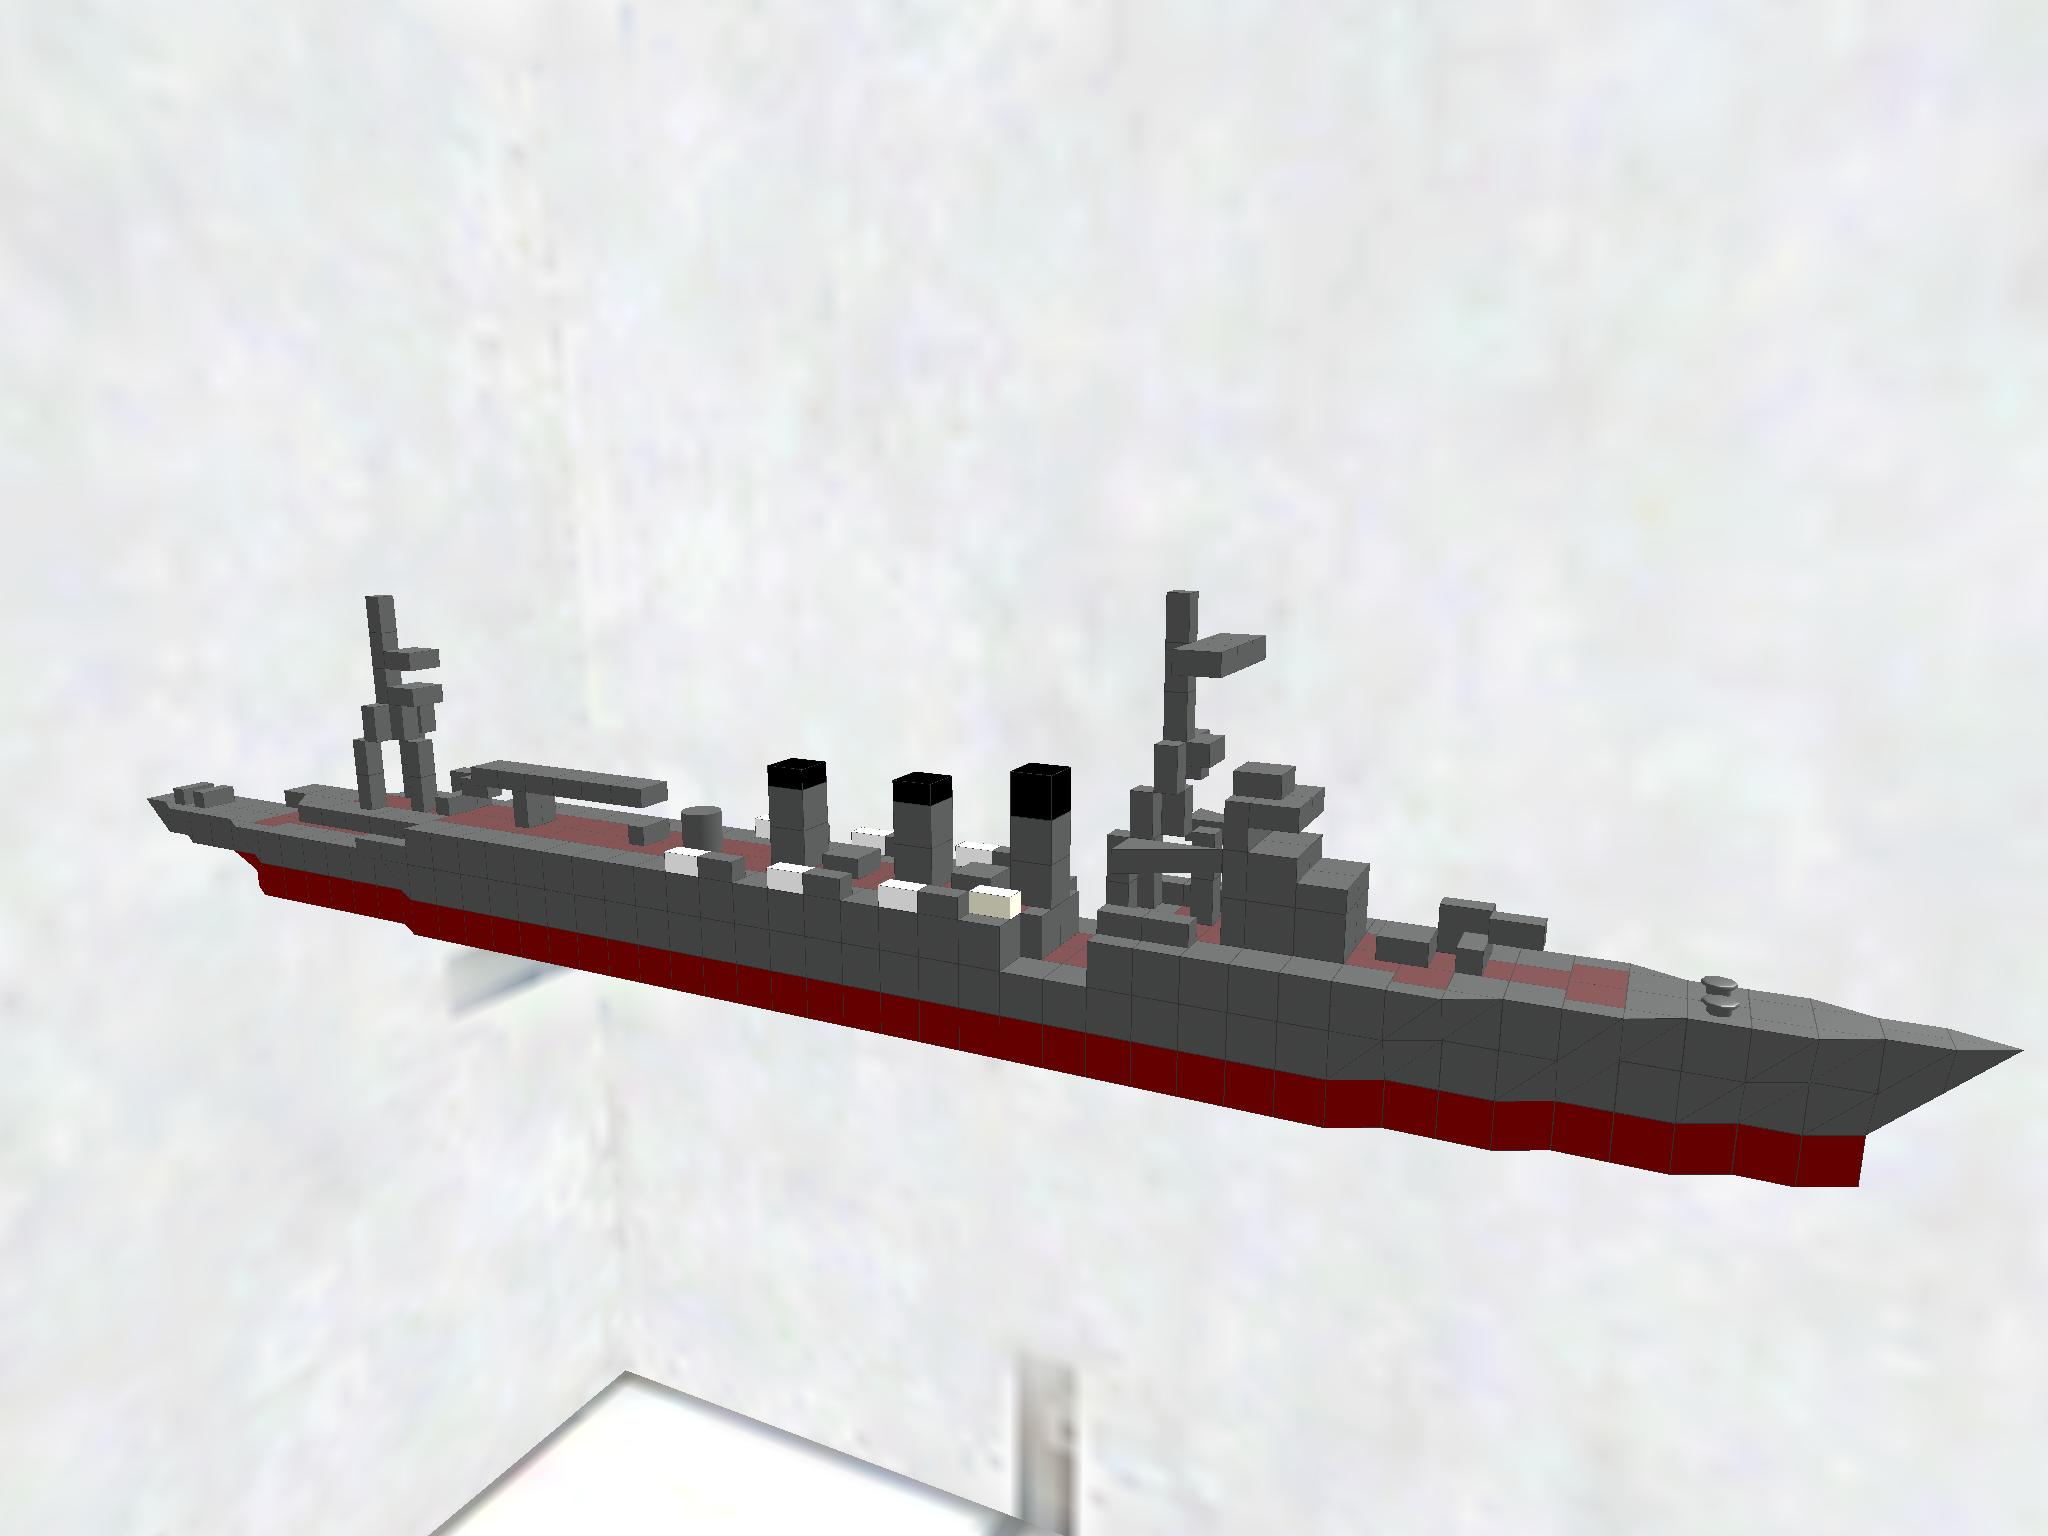 Light cruiser Isuzu